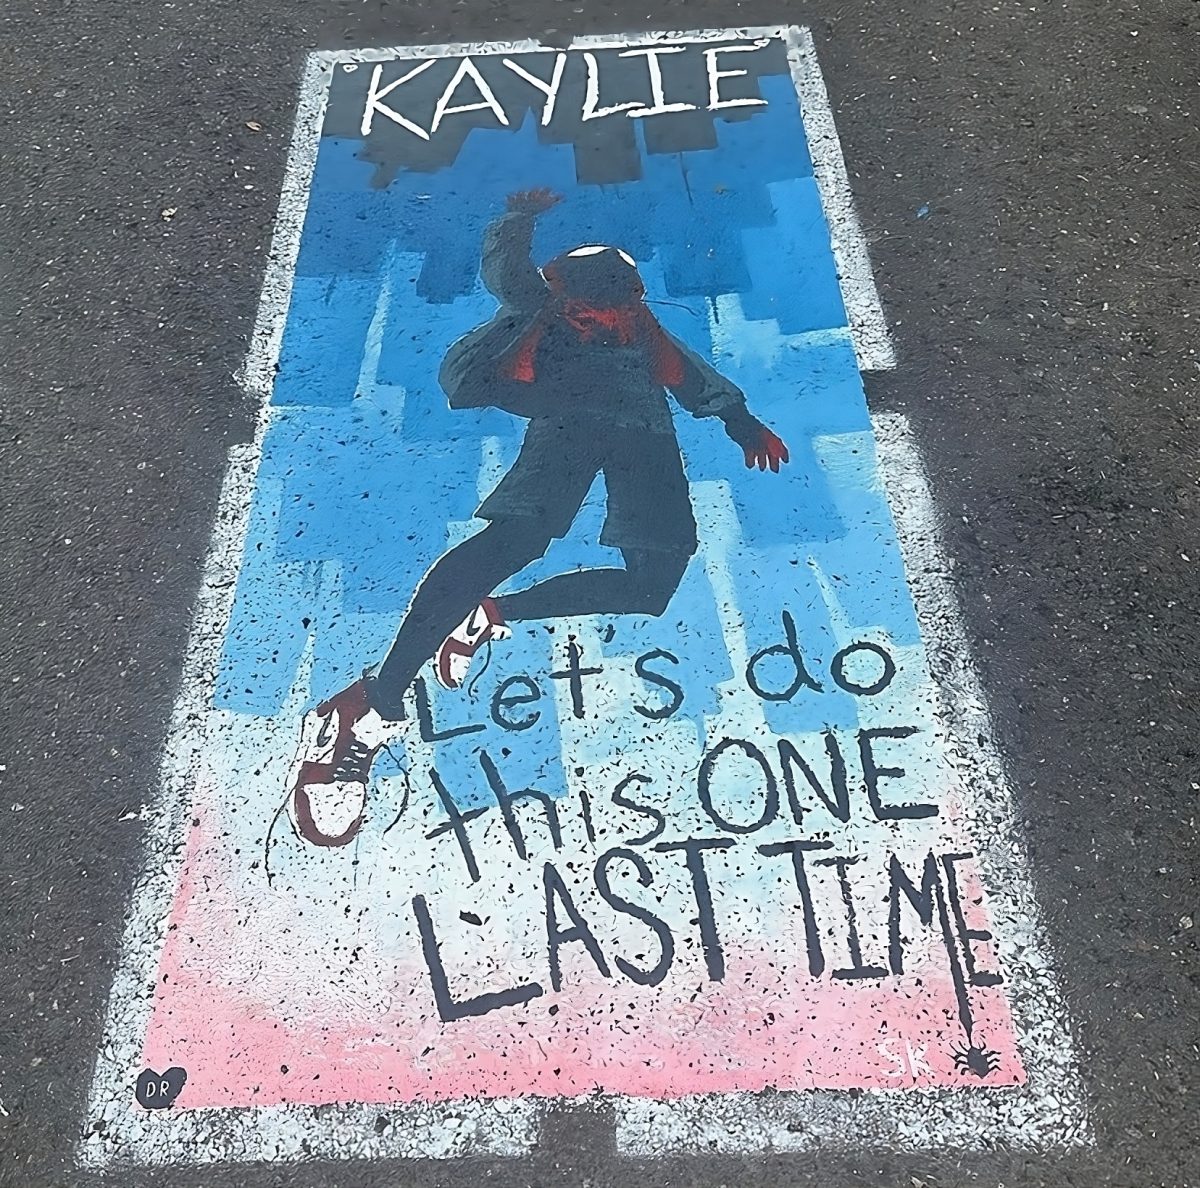 Senior Kaylie Demerritts Spiderman-themed parking spot